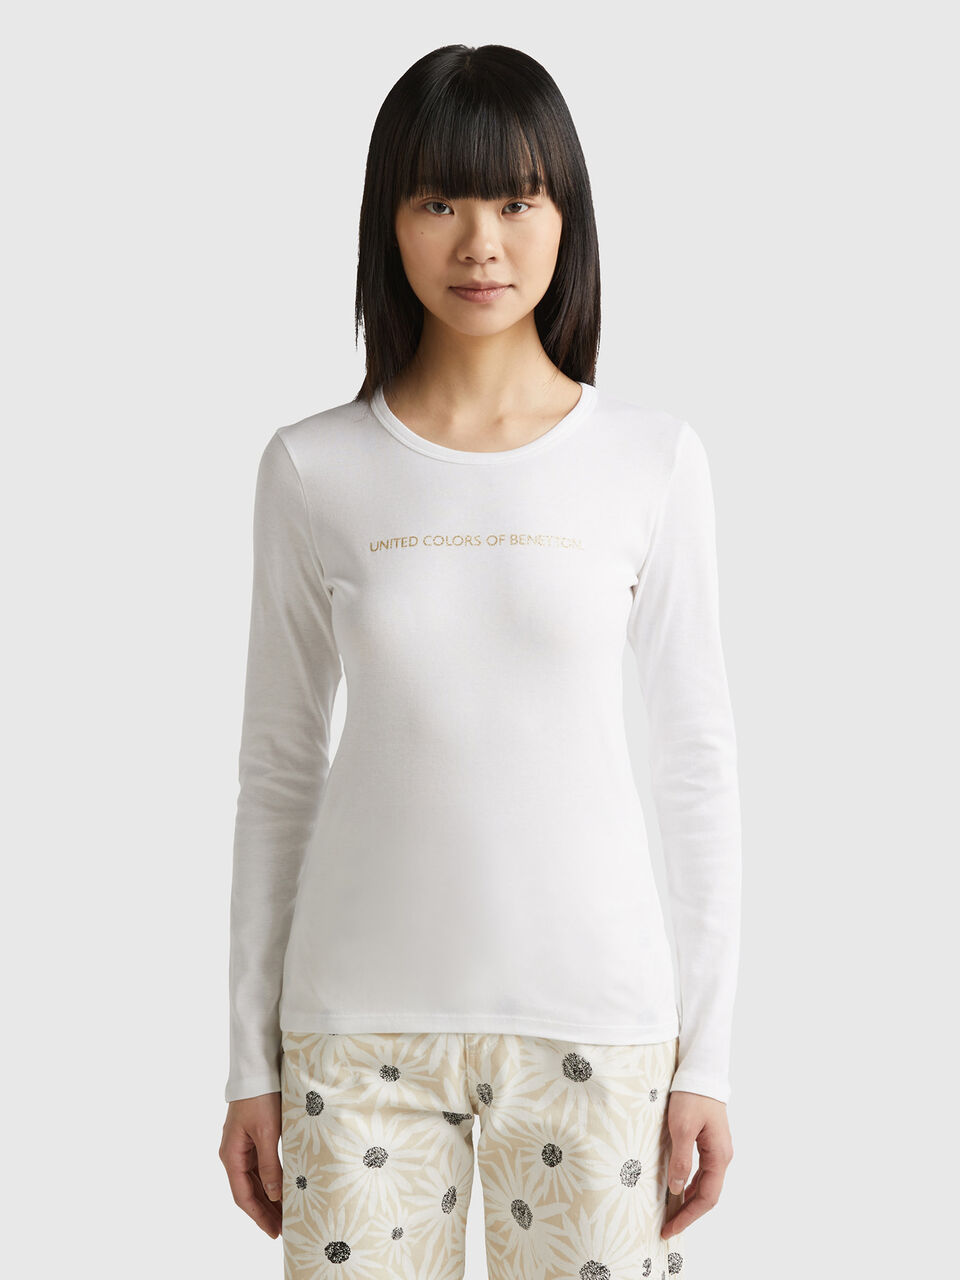 Camiseta blanca 100% algodón de manga larga para mujer